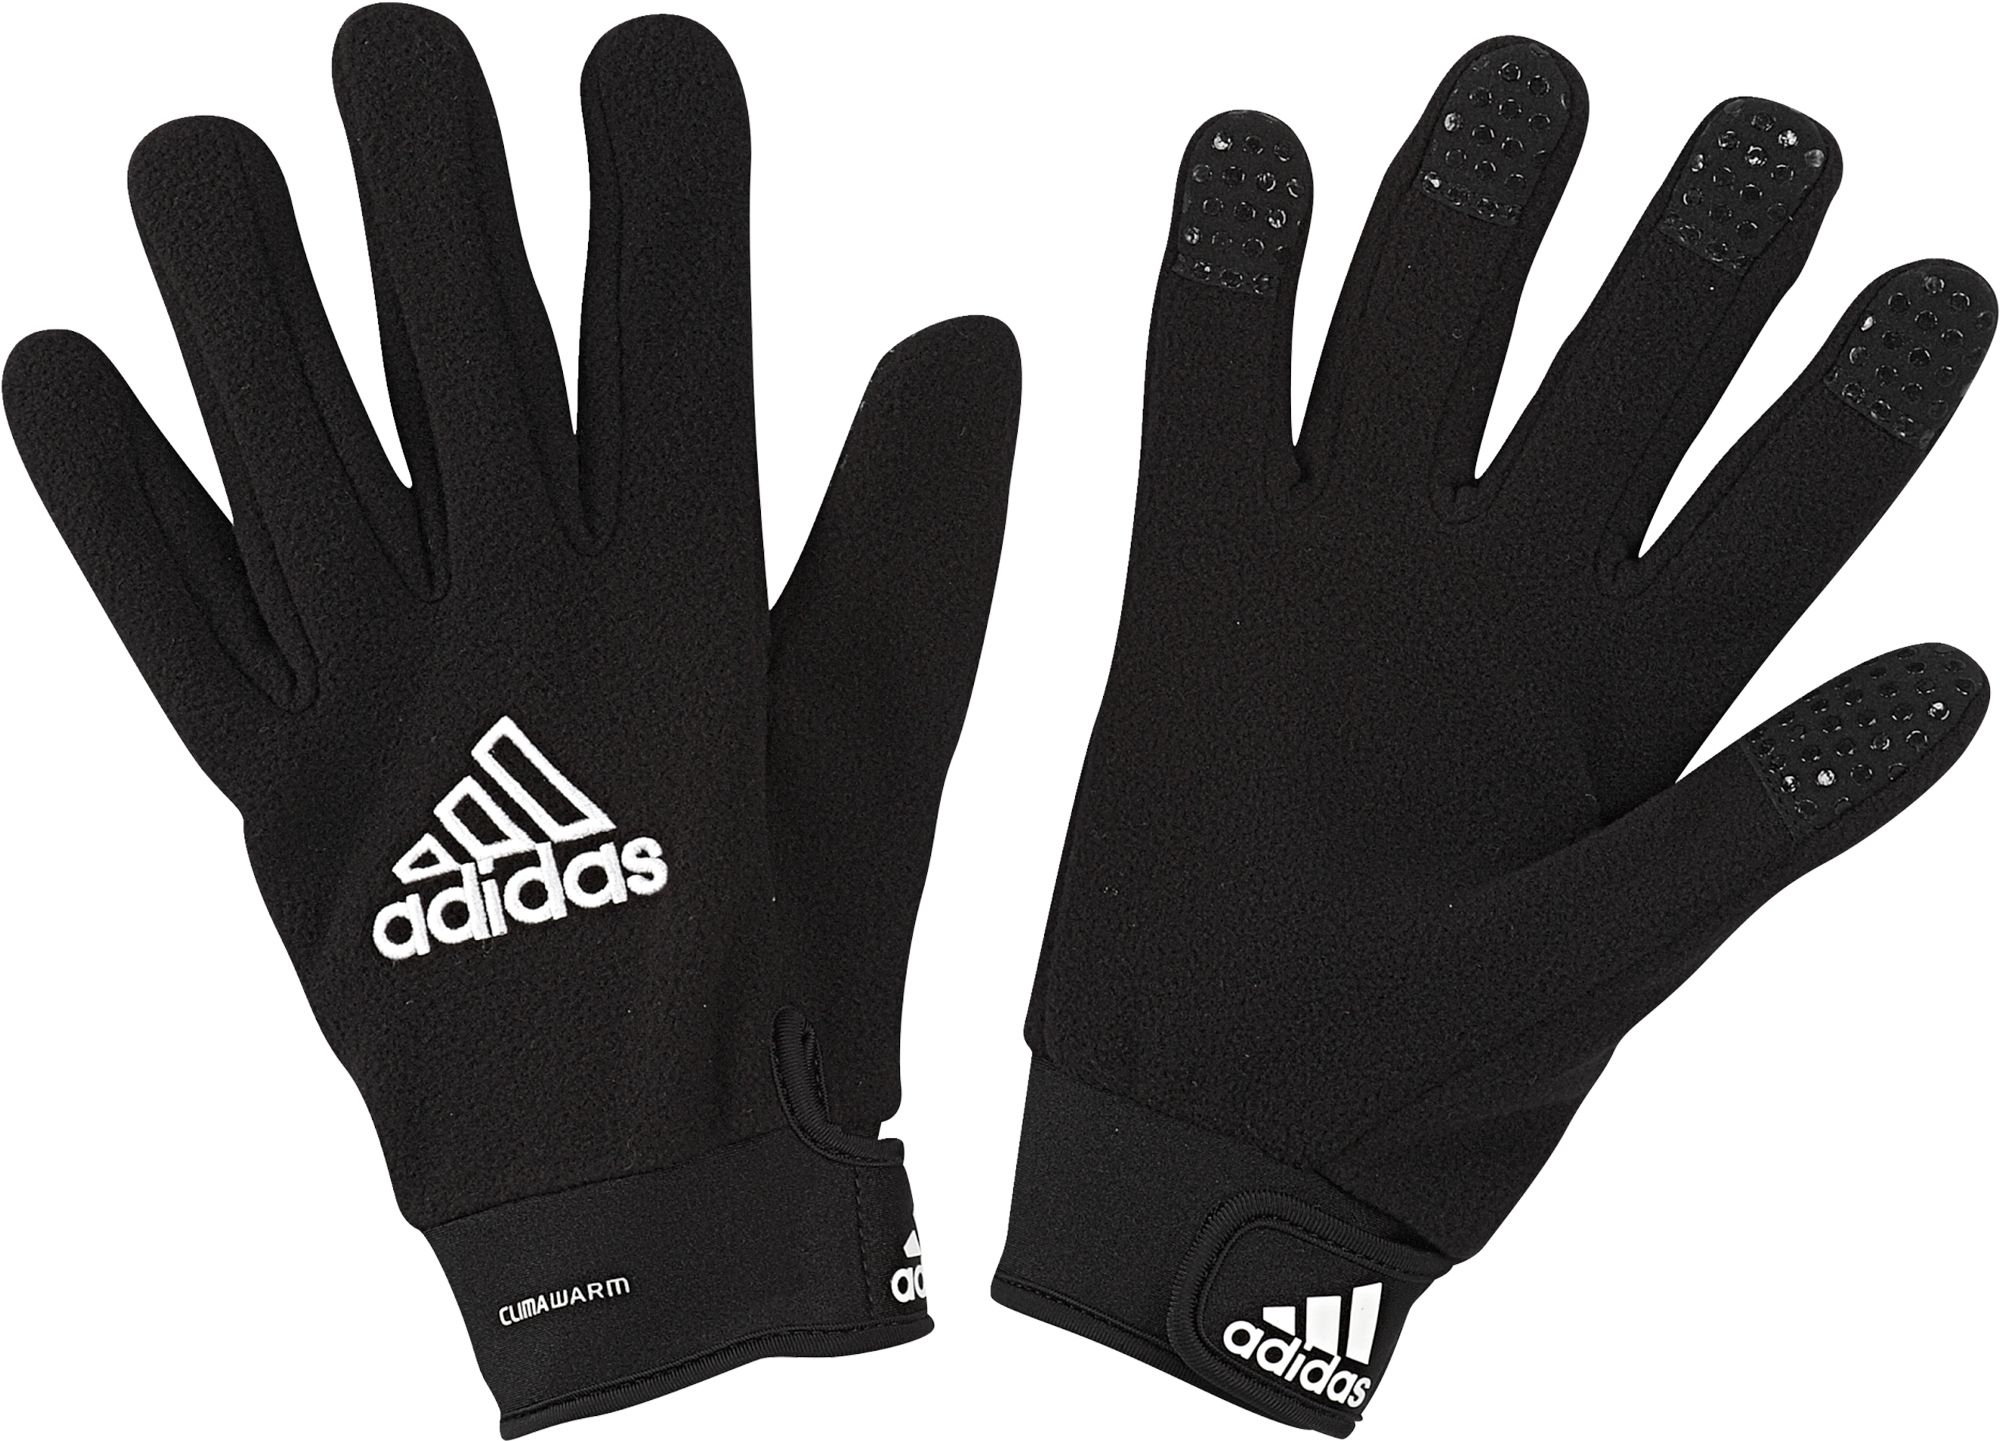 adidas soccer gloves field player